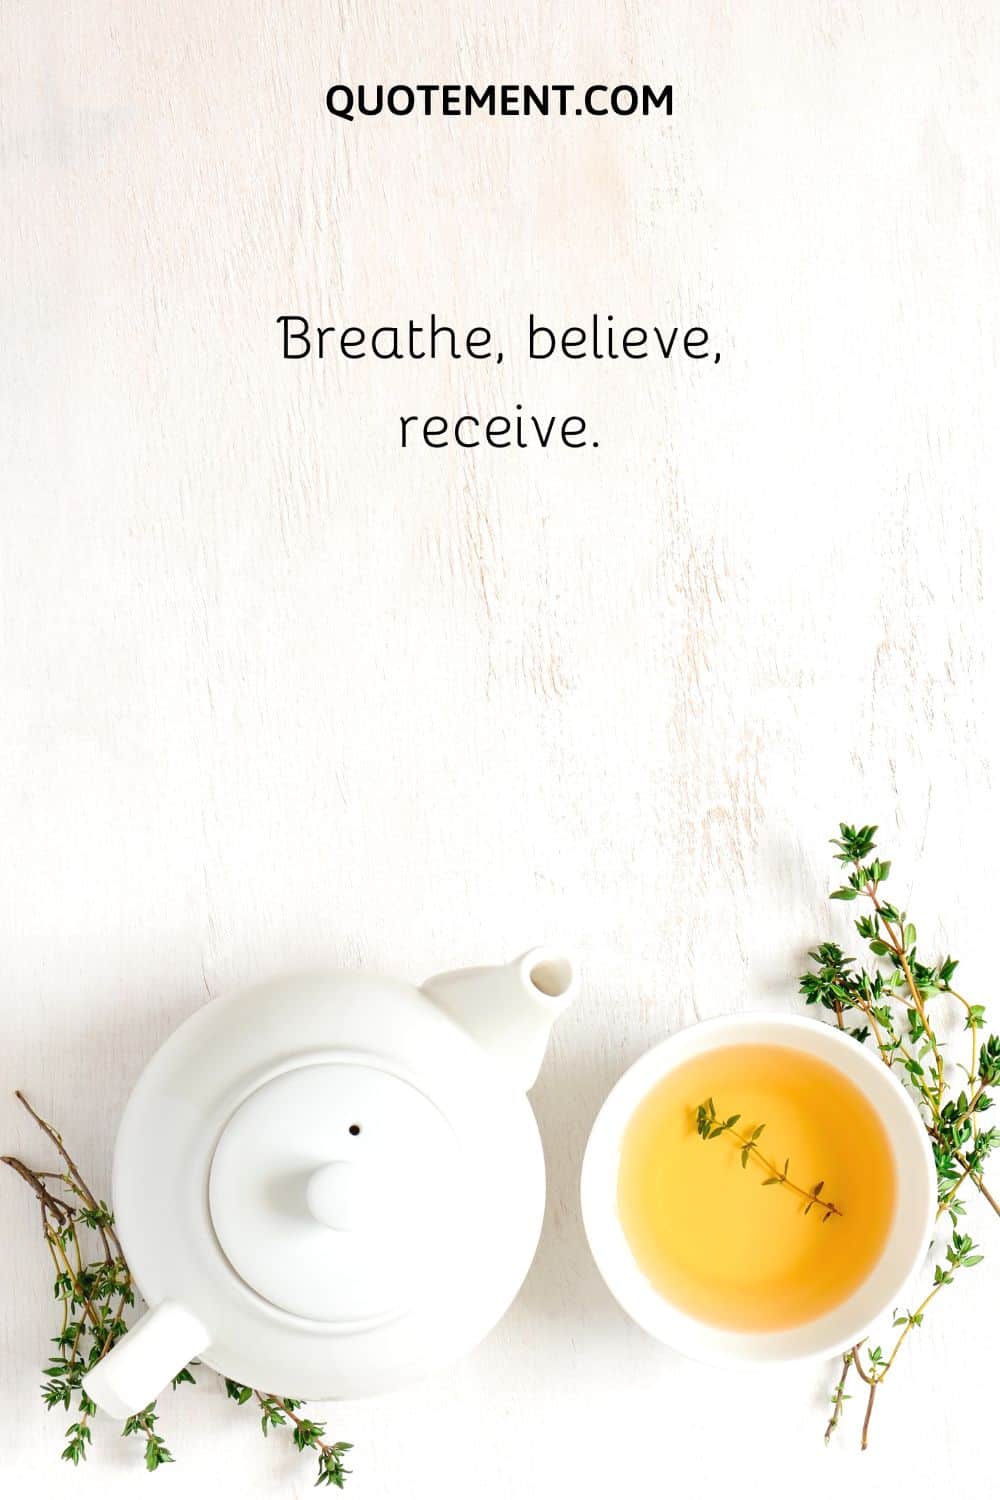 Breathe, believe, receive.